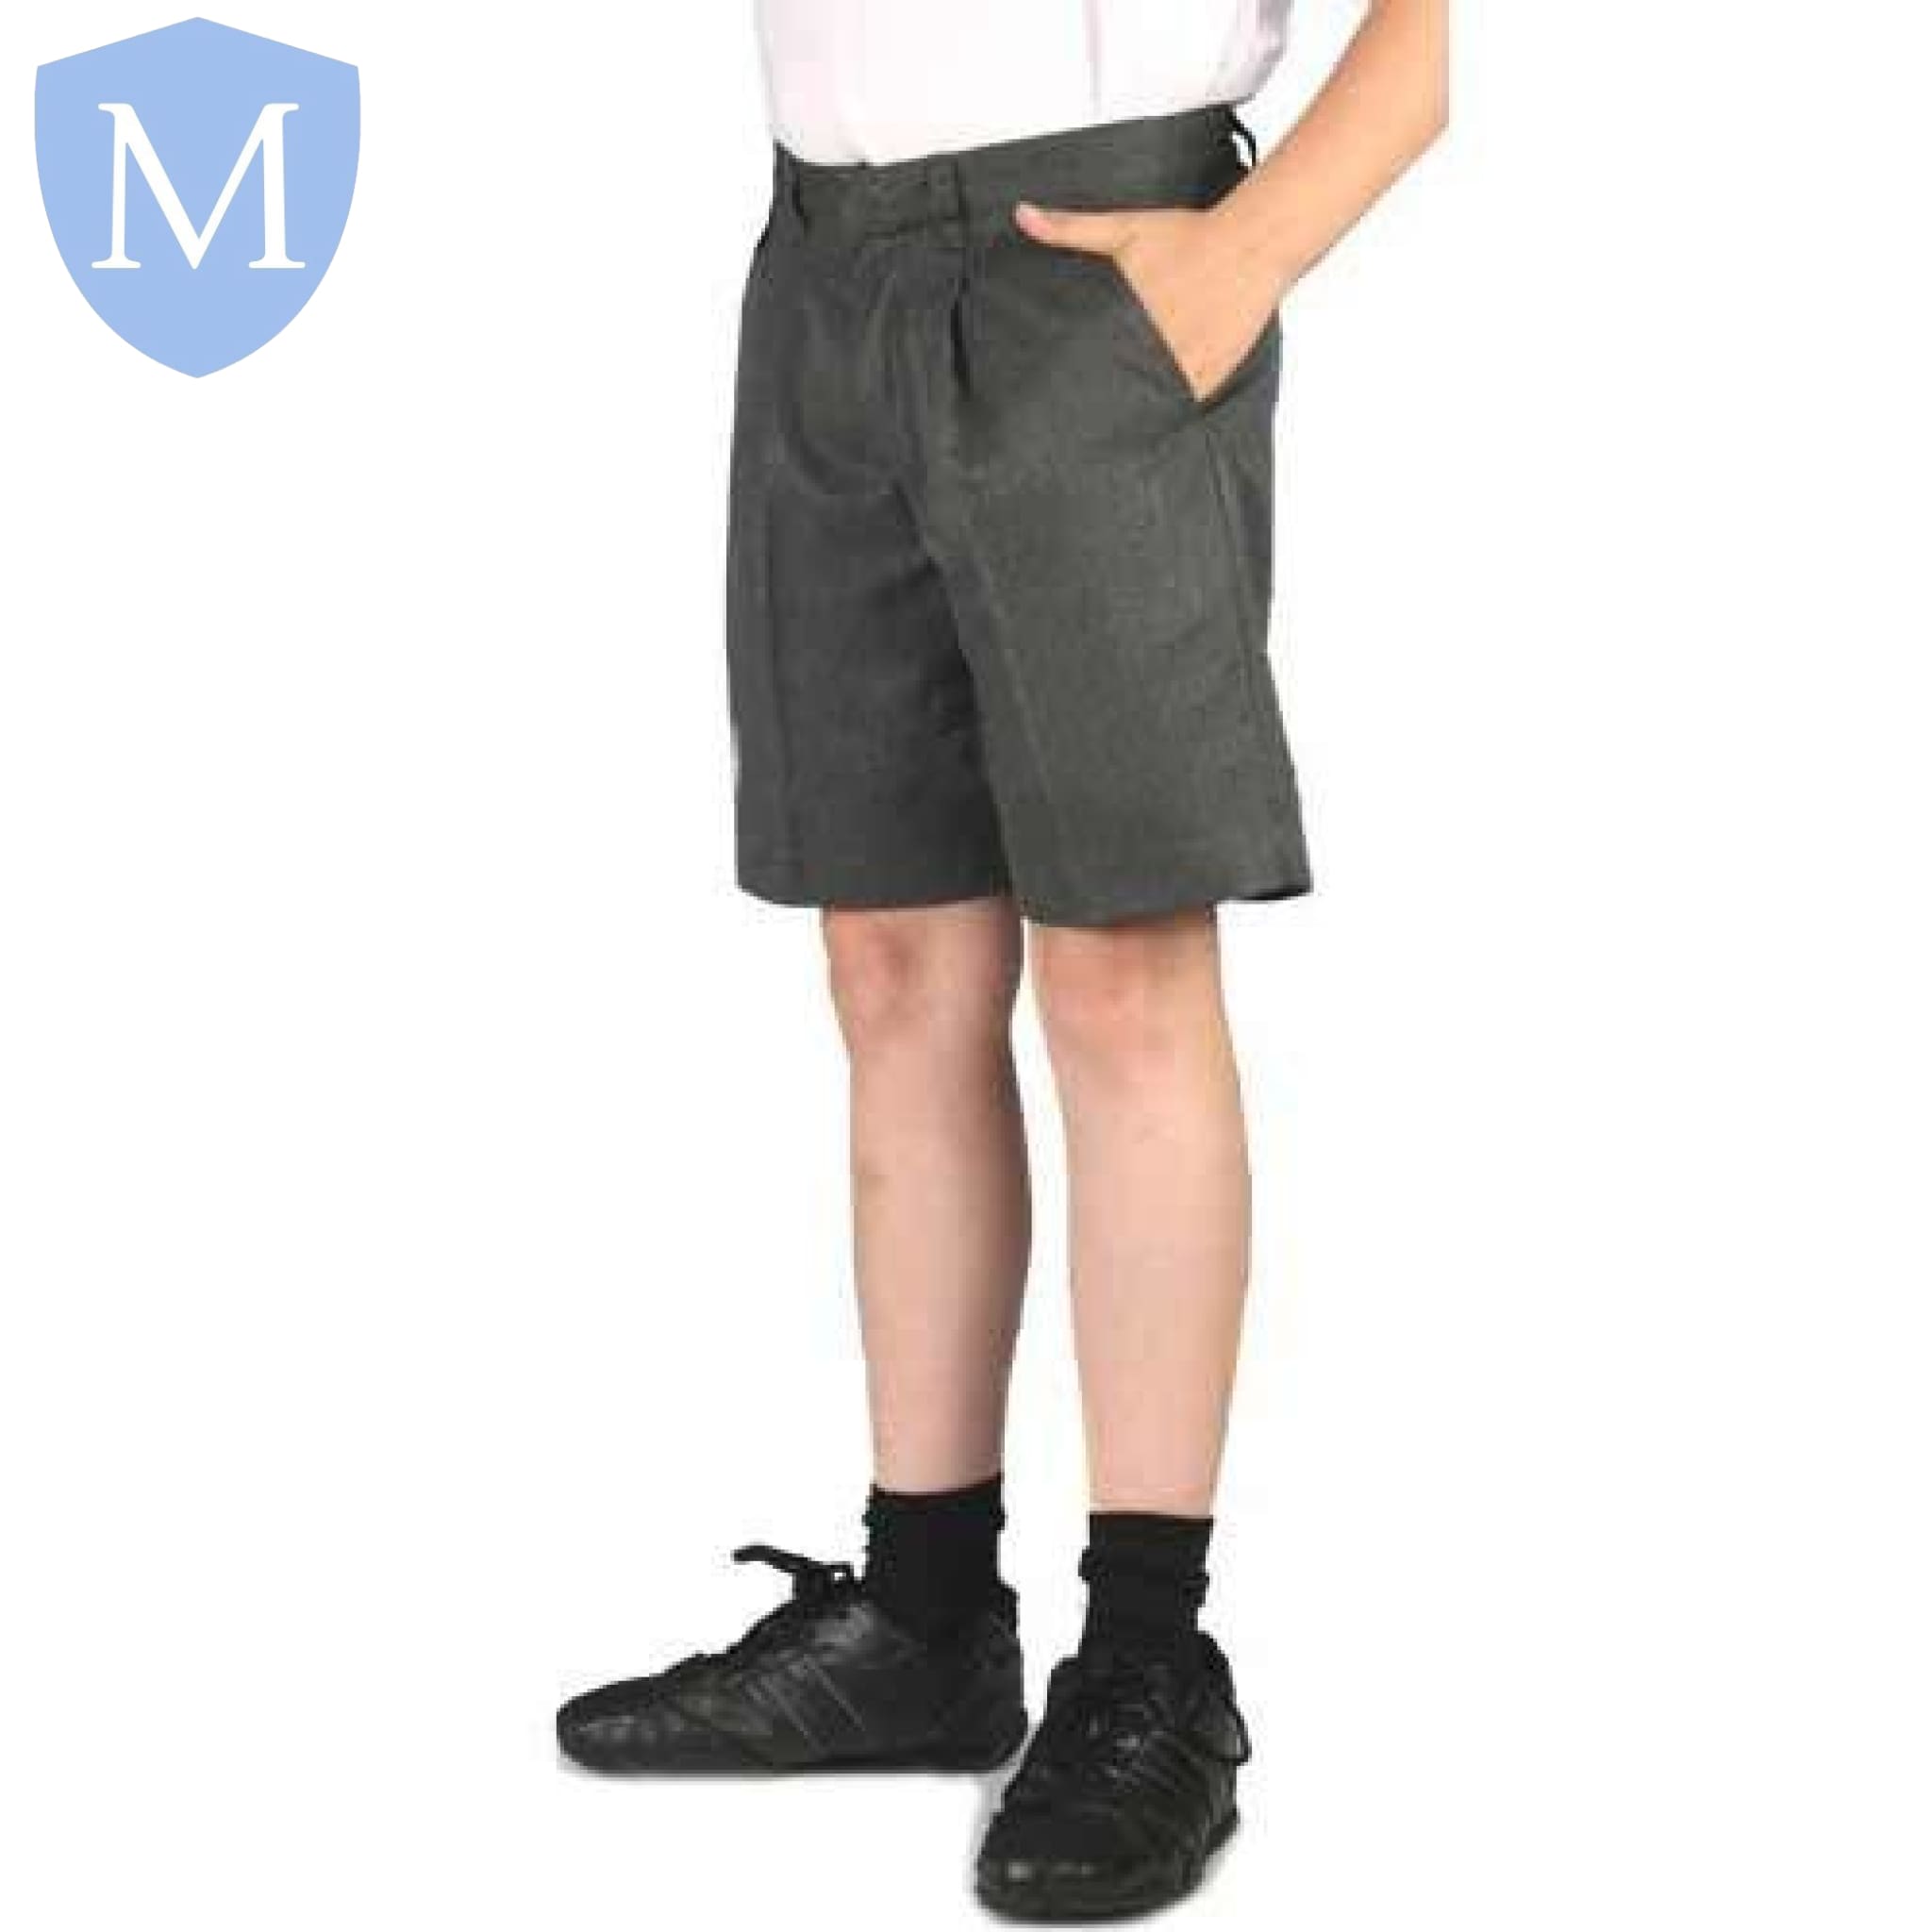 Plain Boys Uniform Shorts - Grey Size 10-11,Size 11-12,Size 2-3,Size 2XL,Size 3-4,Size 3XL,Size 4-5,Size 5-6,Size 6-7,Size 7-8,Size 9-10,Size Large,Size Medium,Size Small,Size XL,Size 8-9